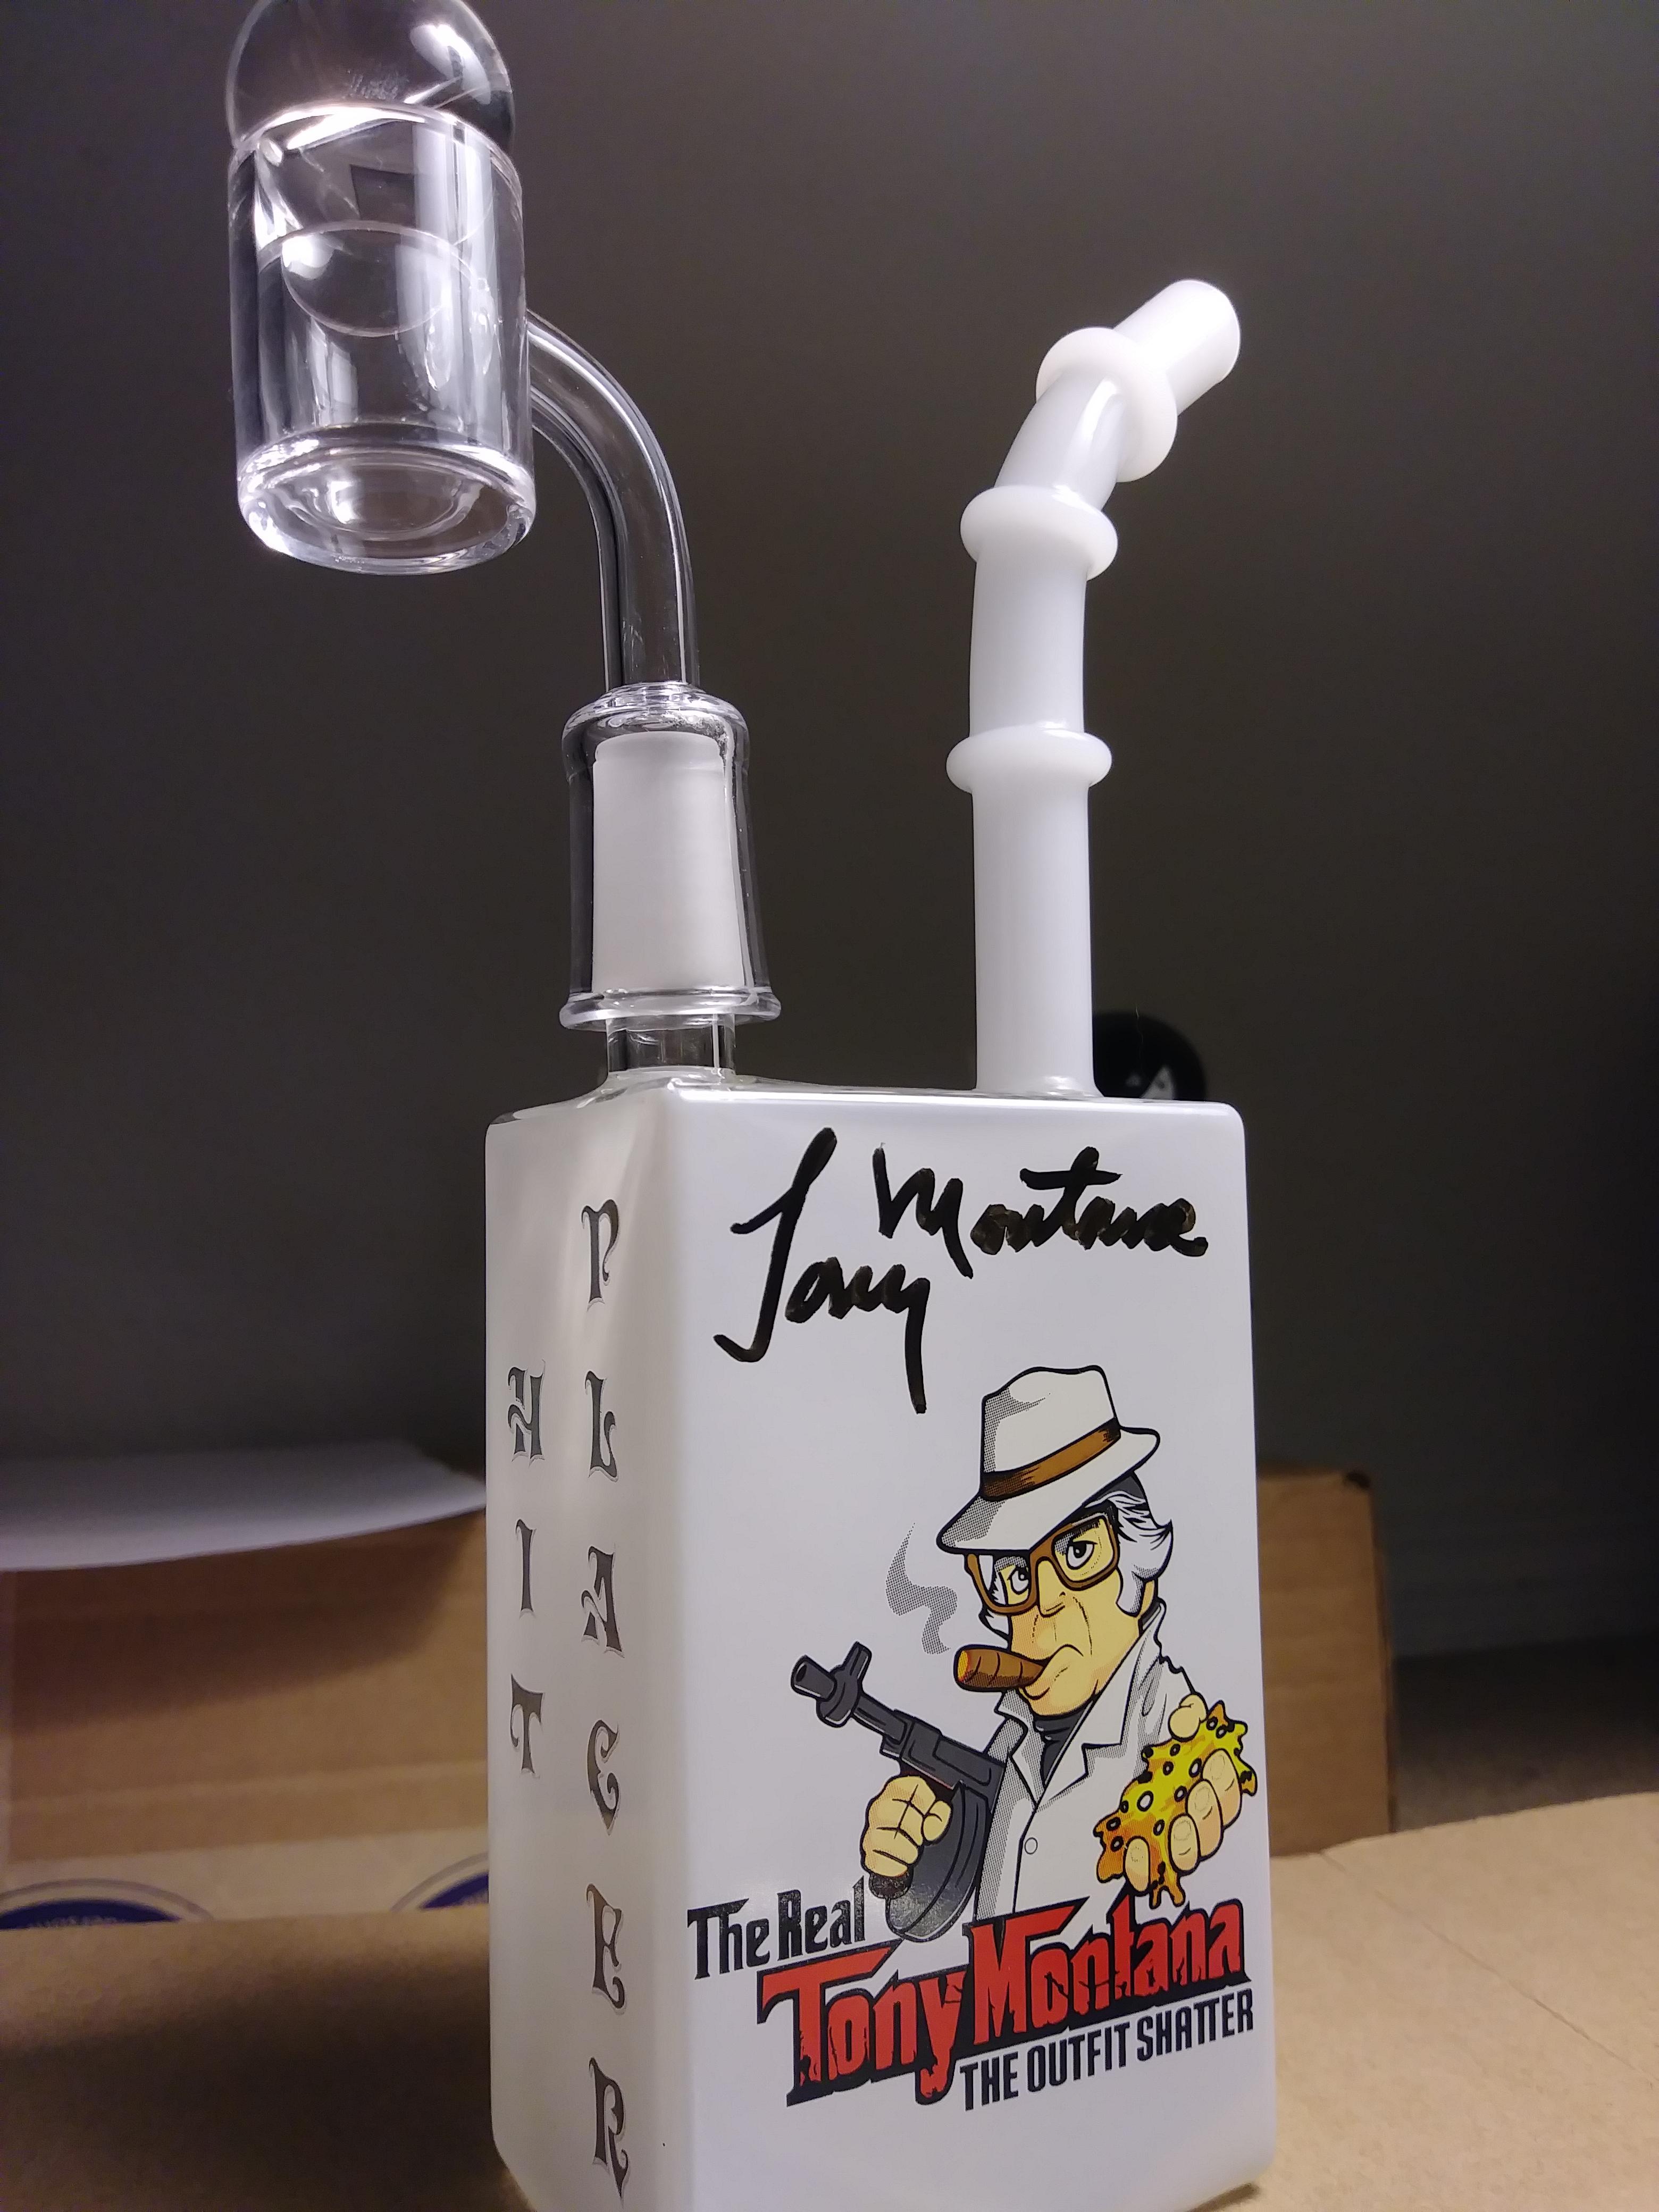 The Real Tony Montana autographed dab rig